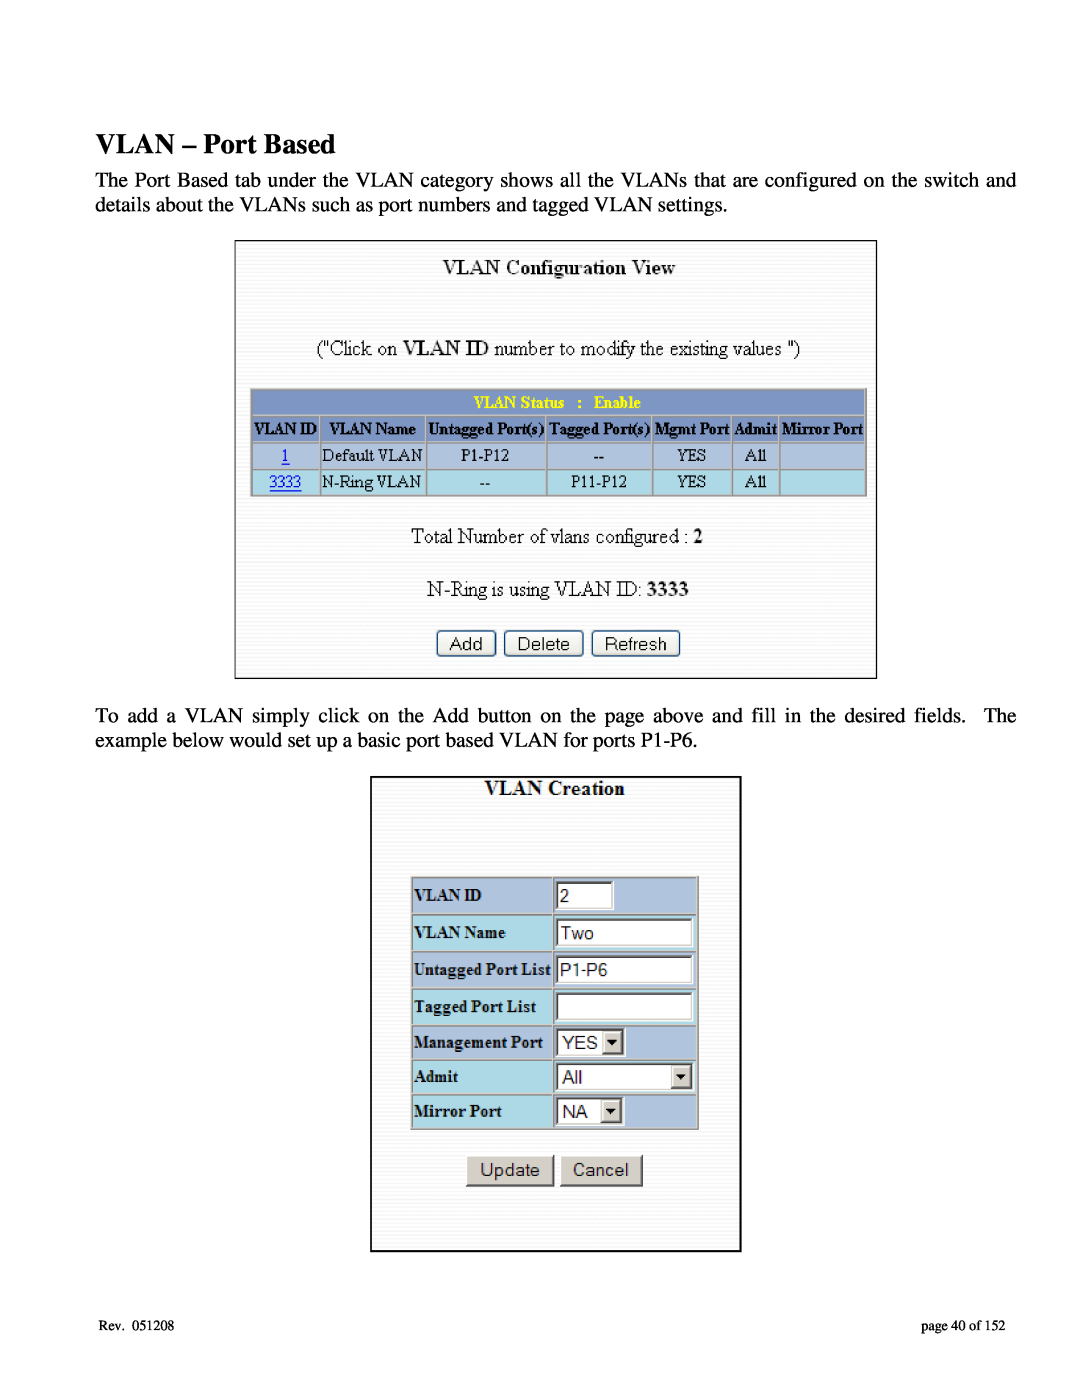 Gigabyte 7014 user manual VLAN - Port Based, page 40 of 